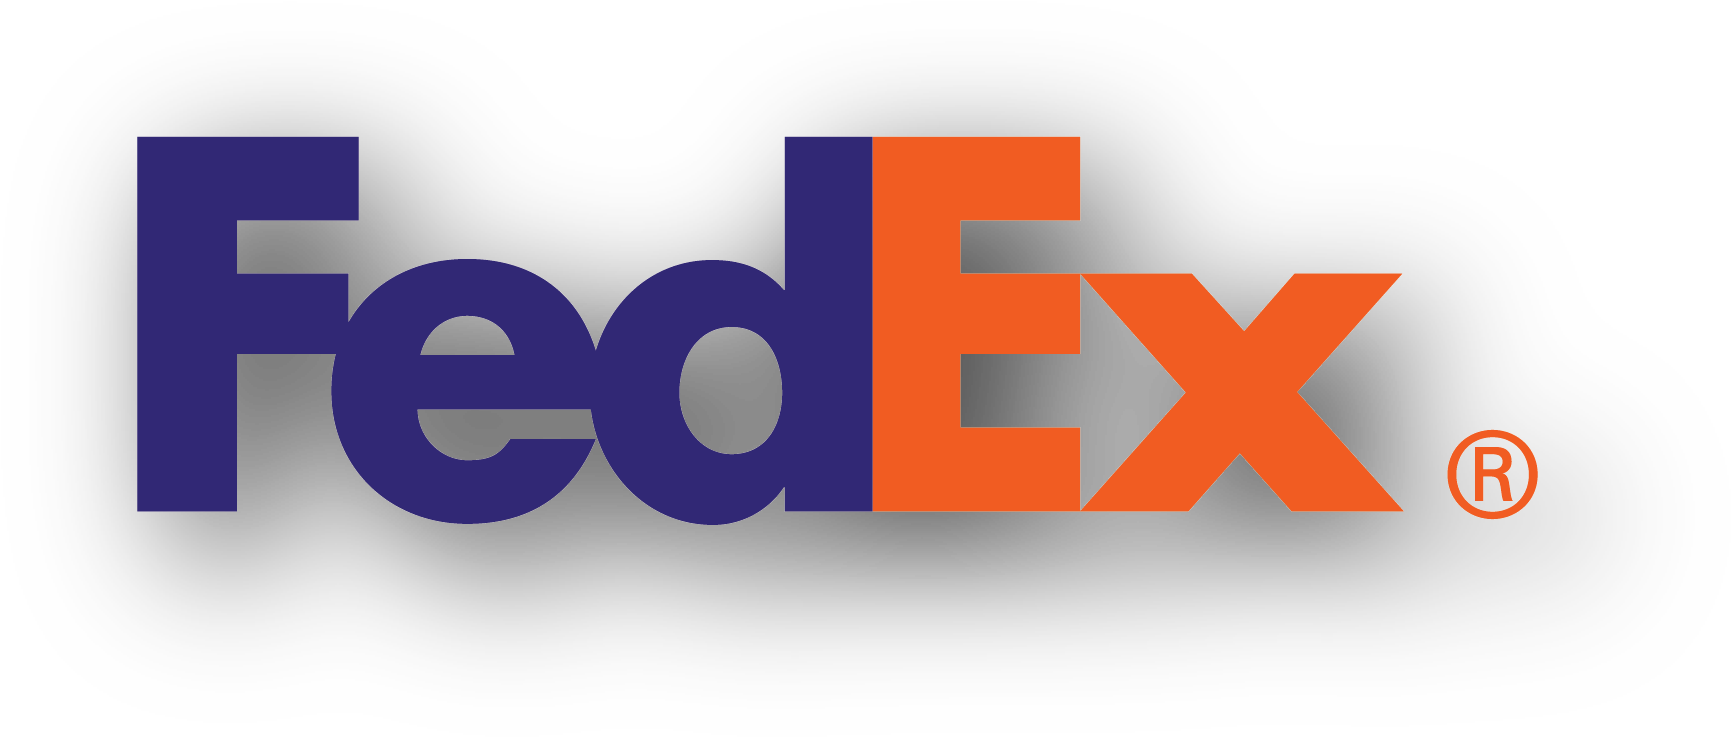 Logo Fedex Free Transparent Image HQ PNG Image